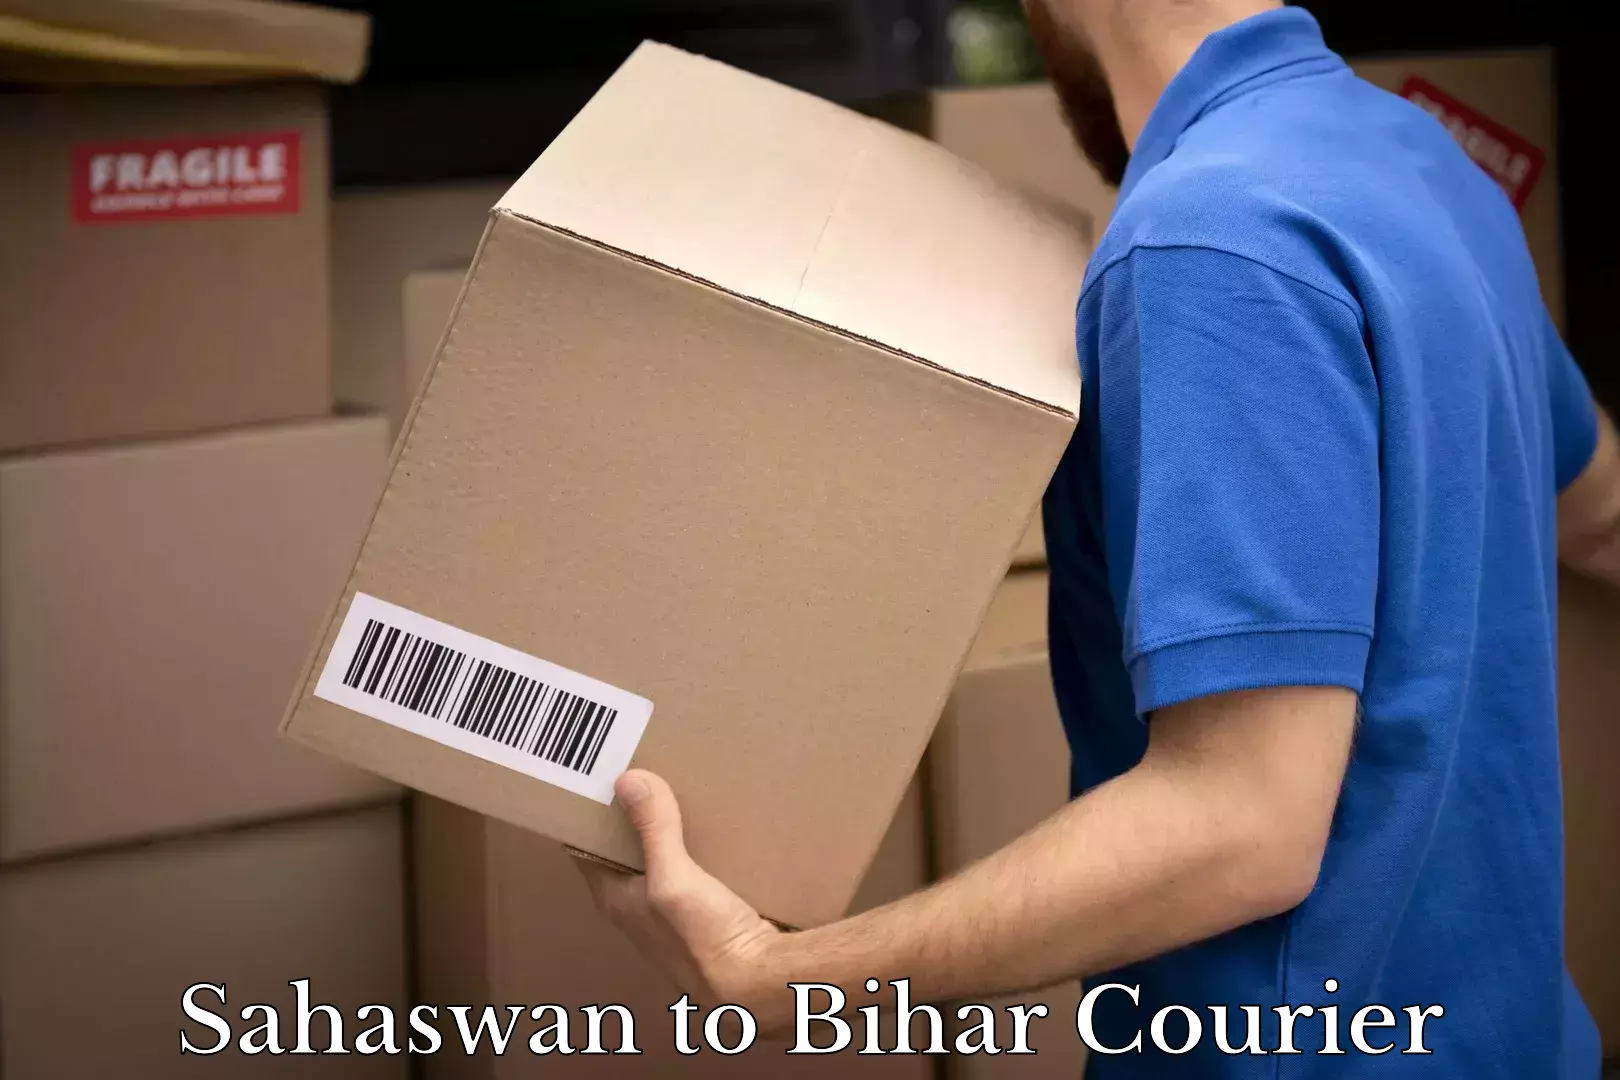 Courier service efficiency Sahaswan to Bihar